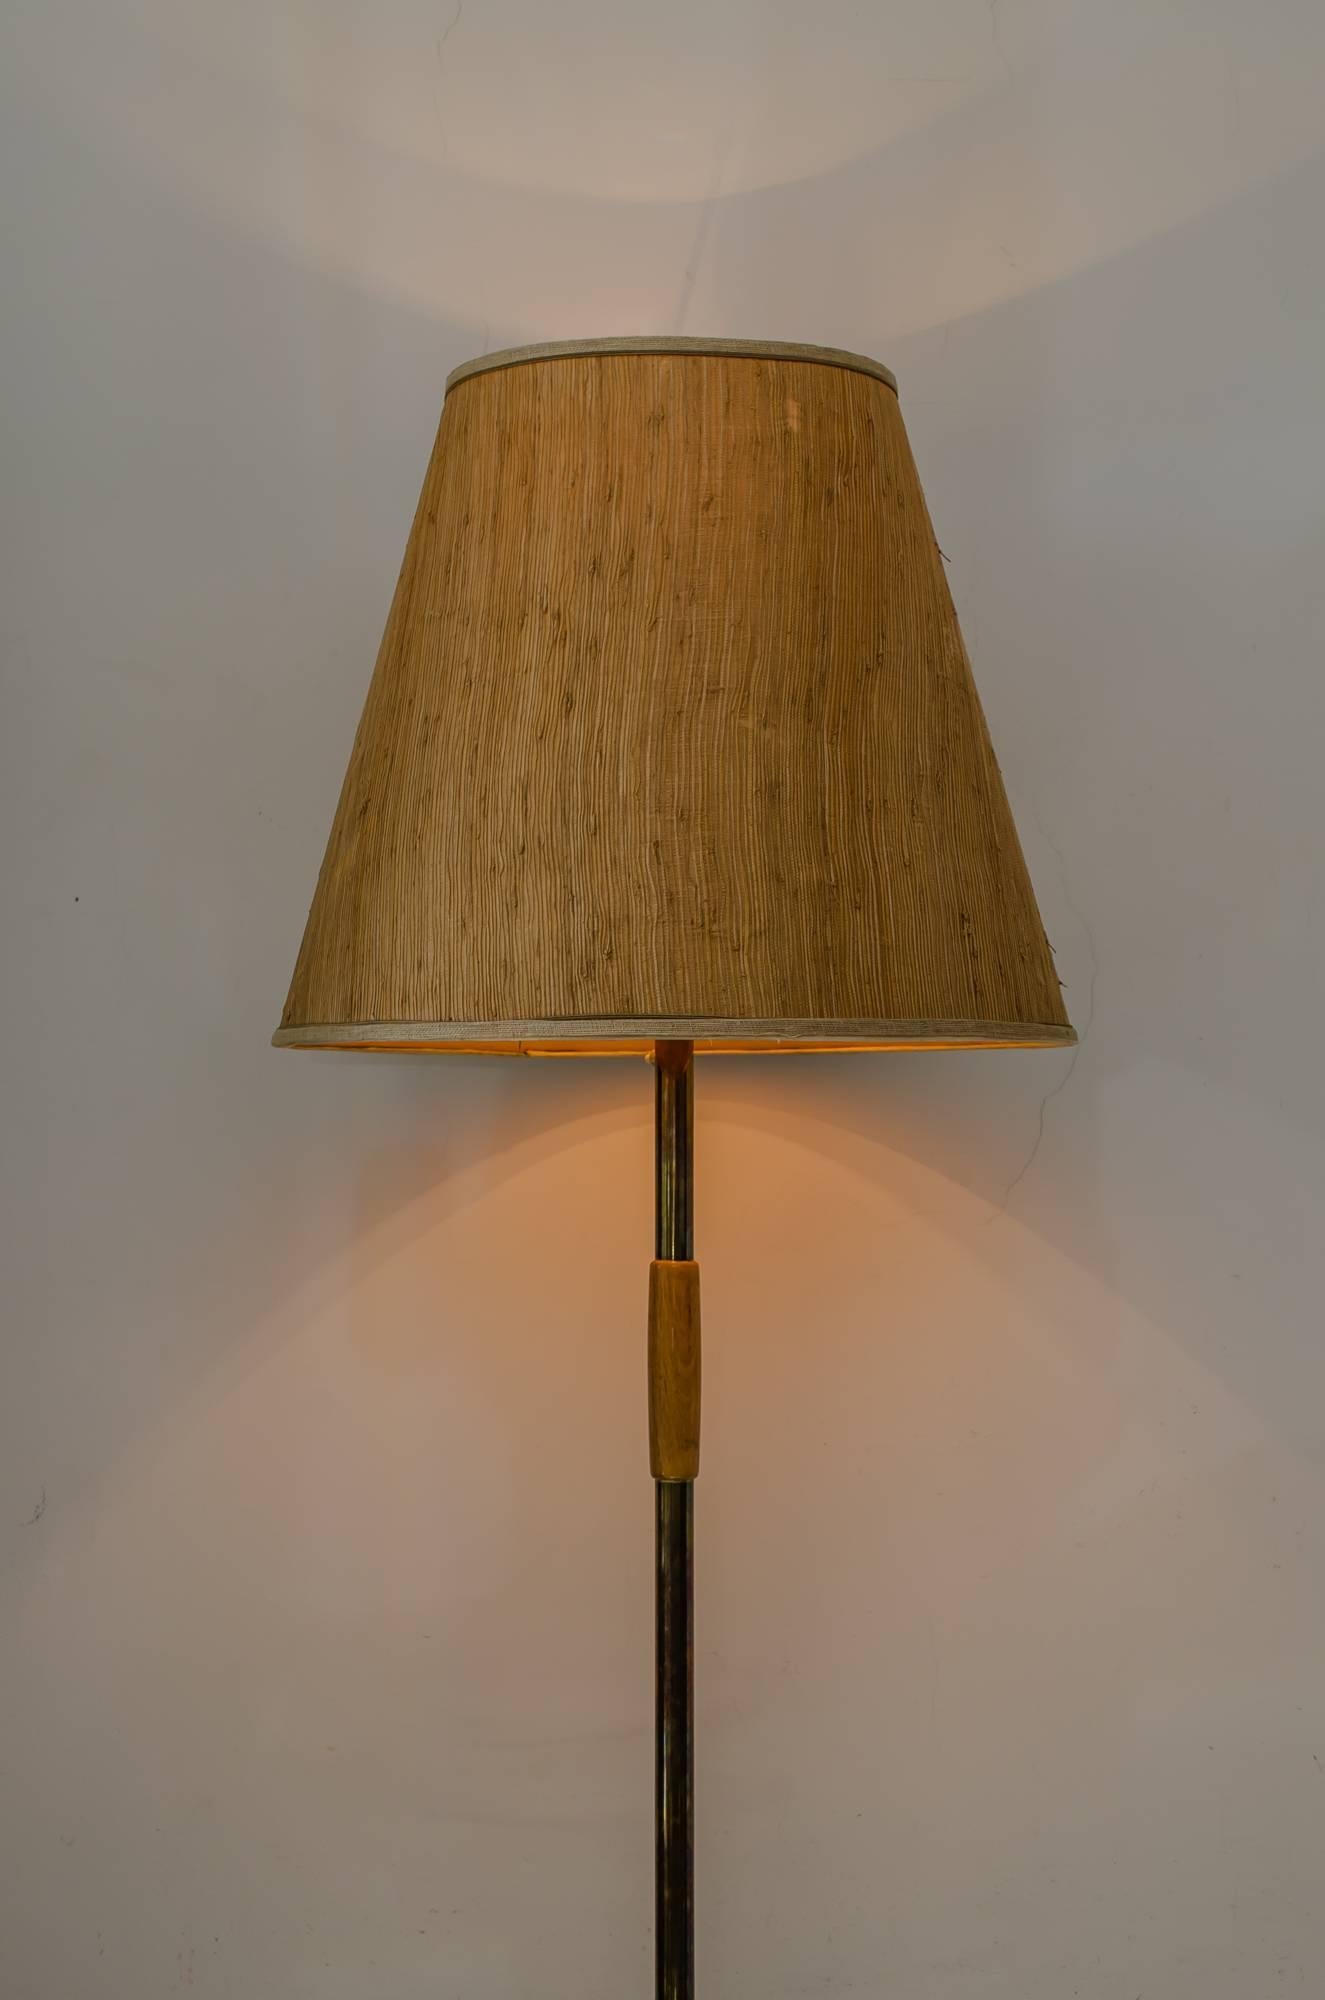 Austrian Floor Lamp by J.T. Kalmar in the 1950s Design is Attributed to Josef Frank